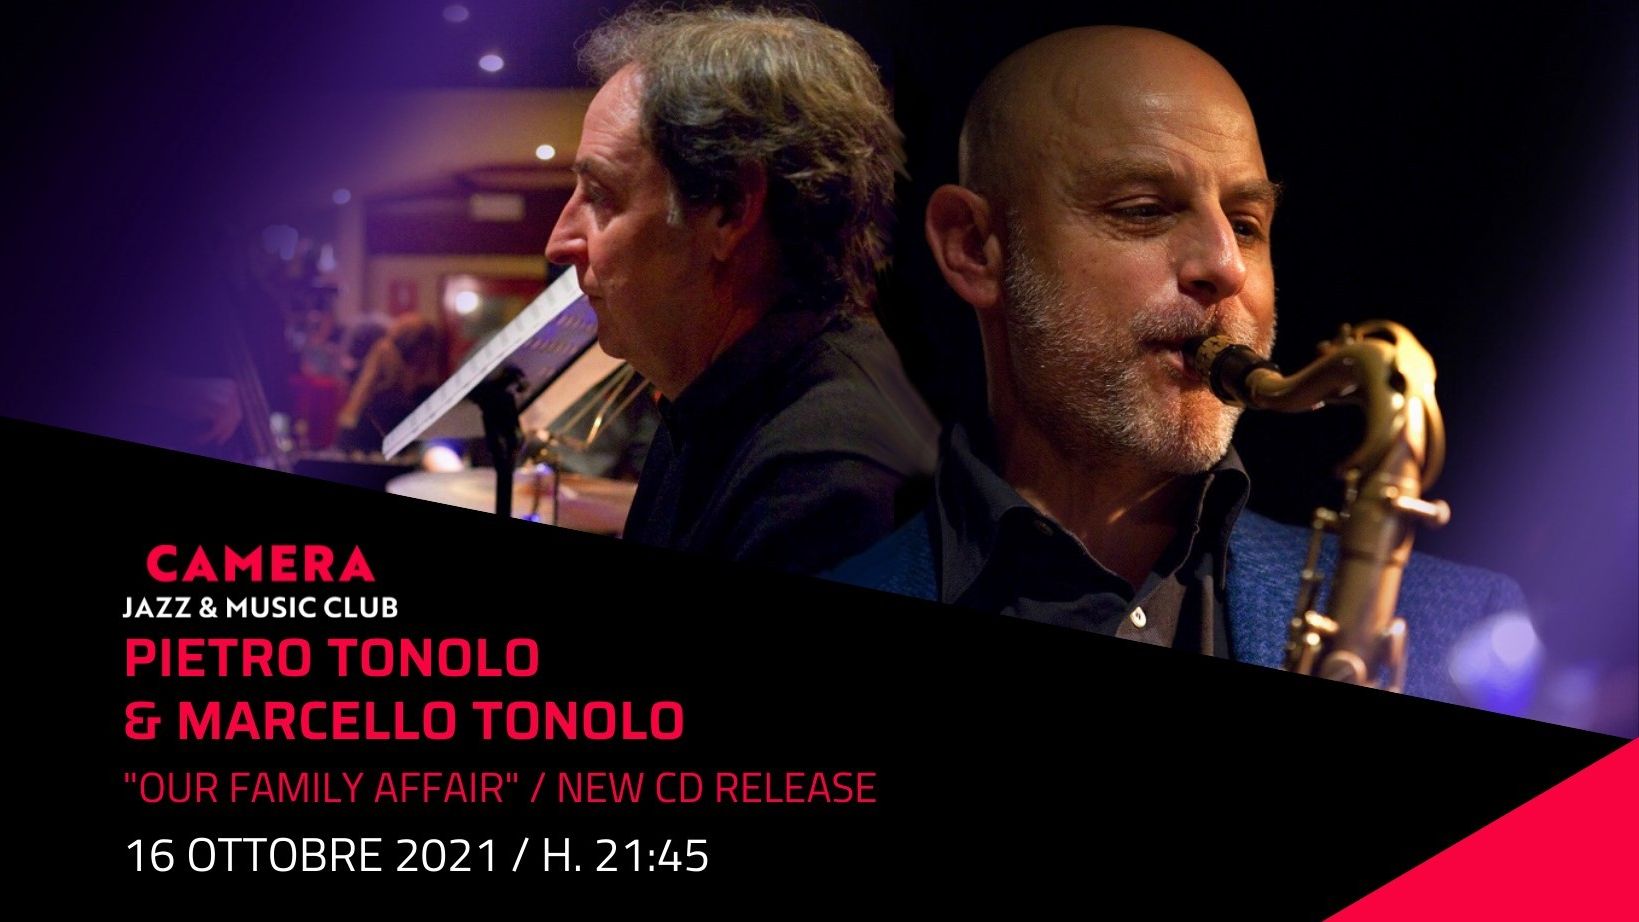 Pietro Tonolo & Marcello Tonolo “Our Family Affair” New CD Release